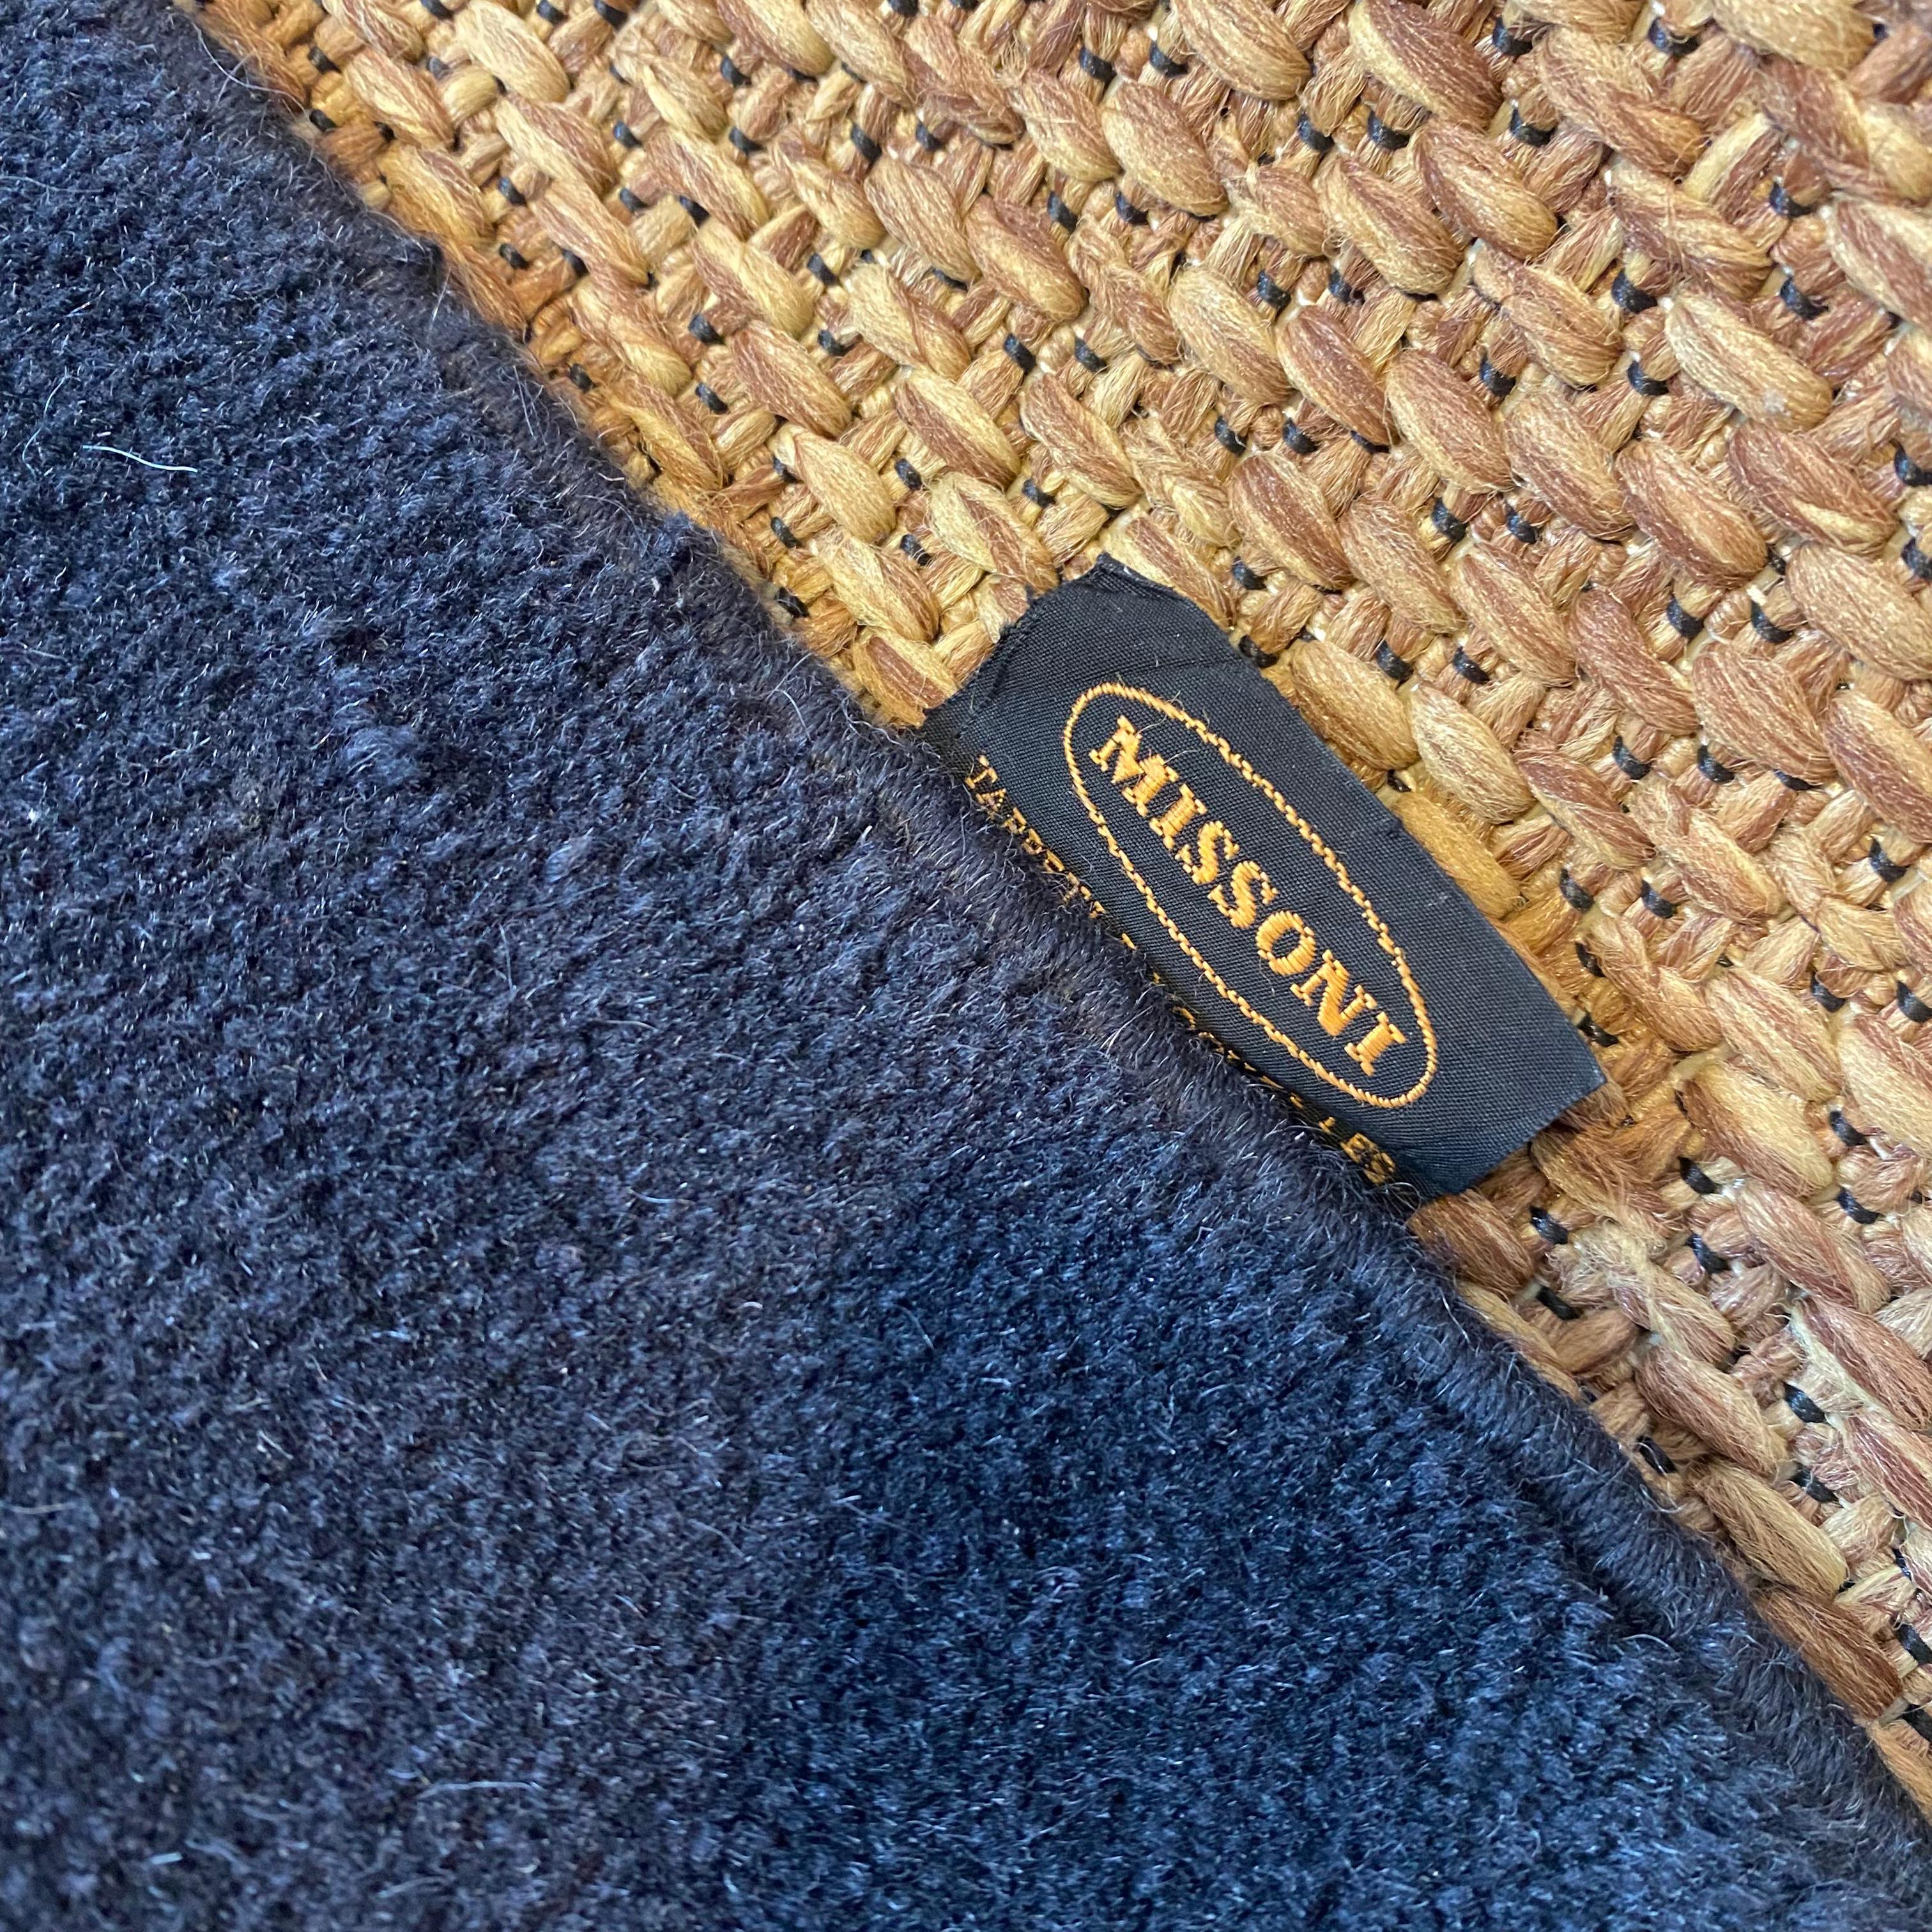 Ottavio Missoni's Geometrical Wool Carpet For Sale 1